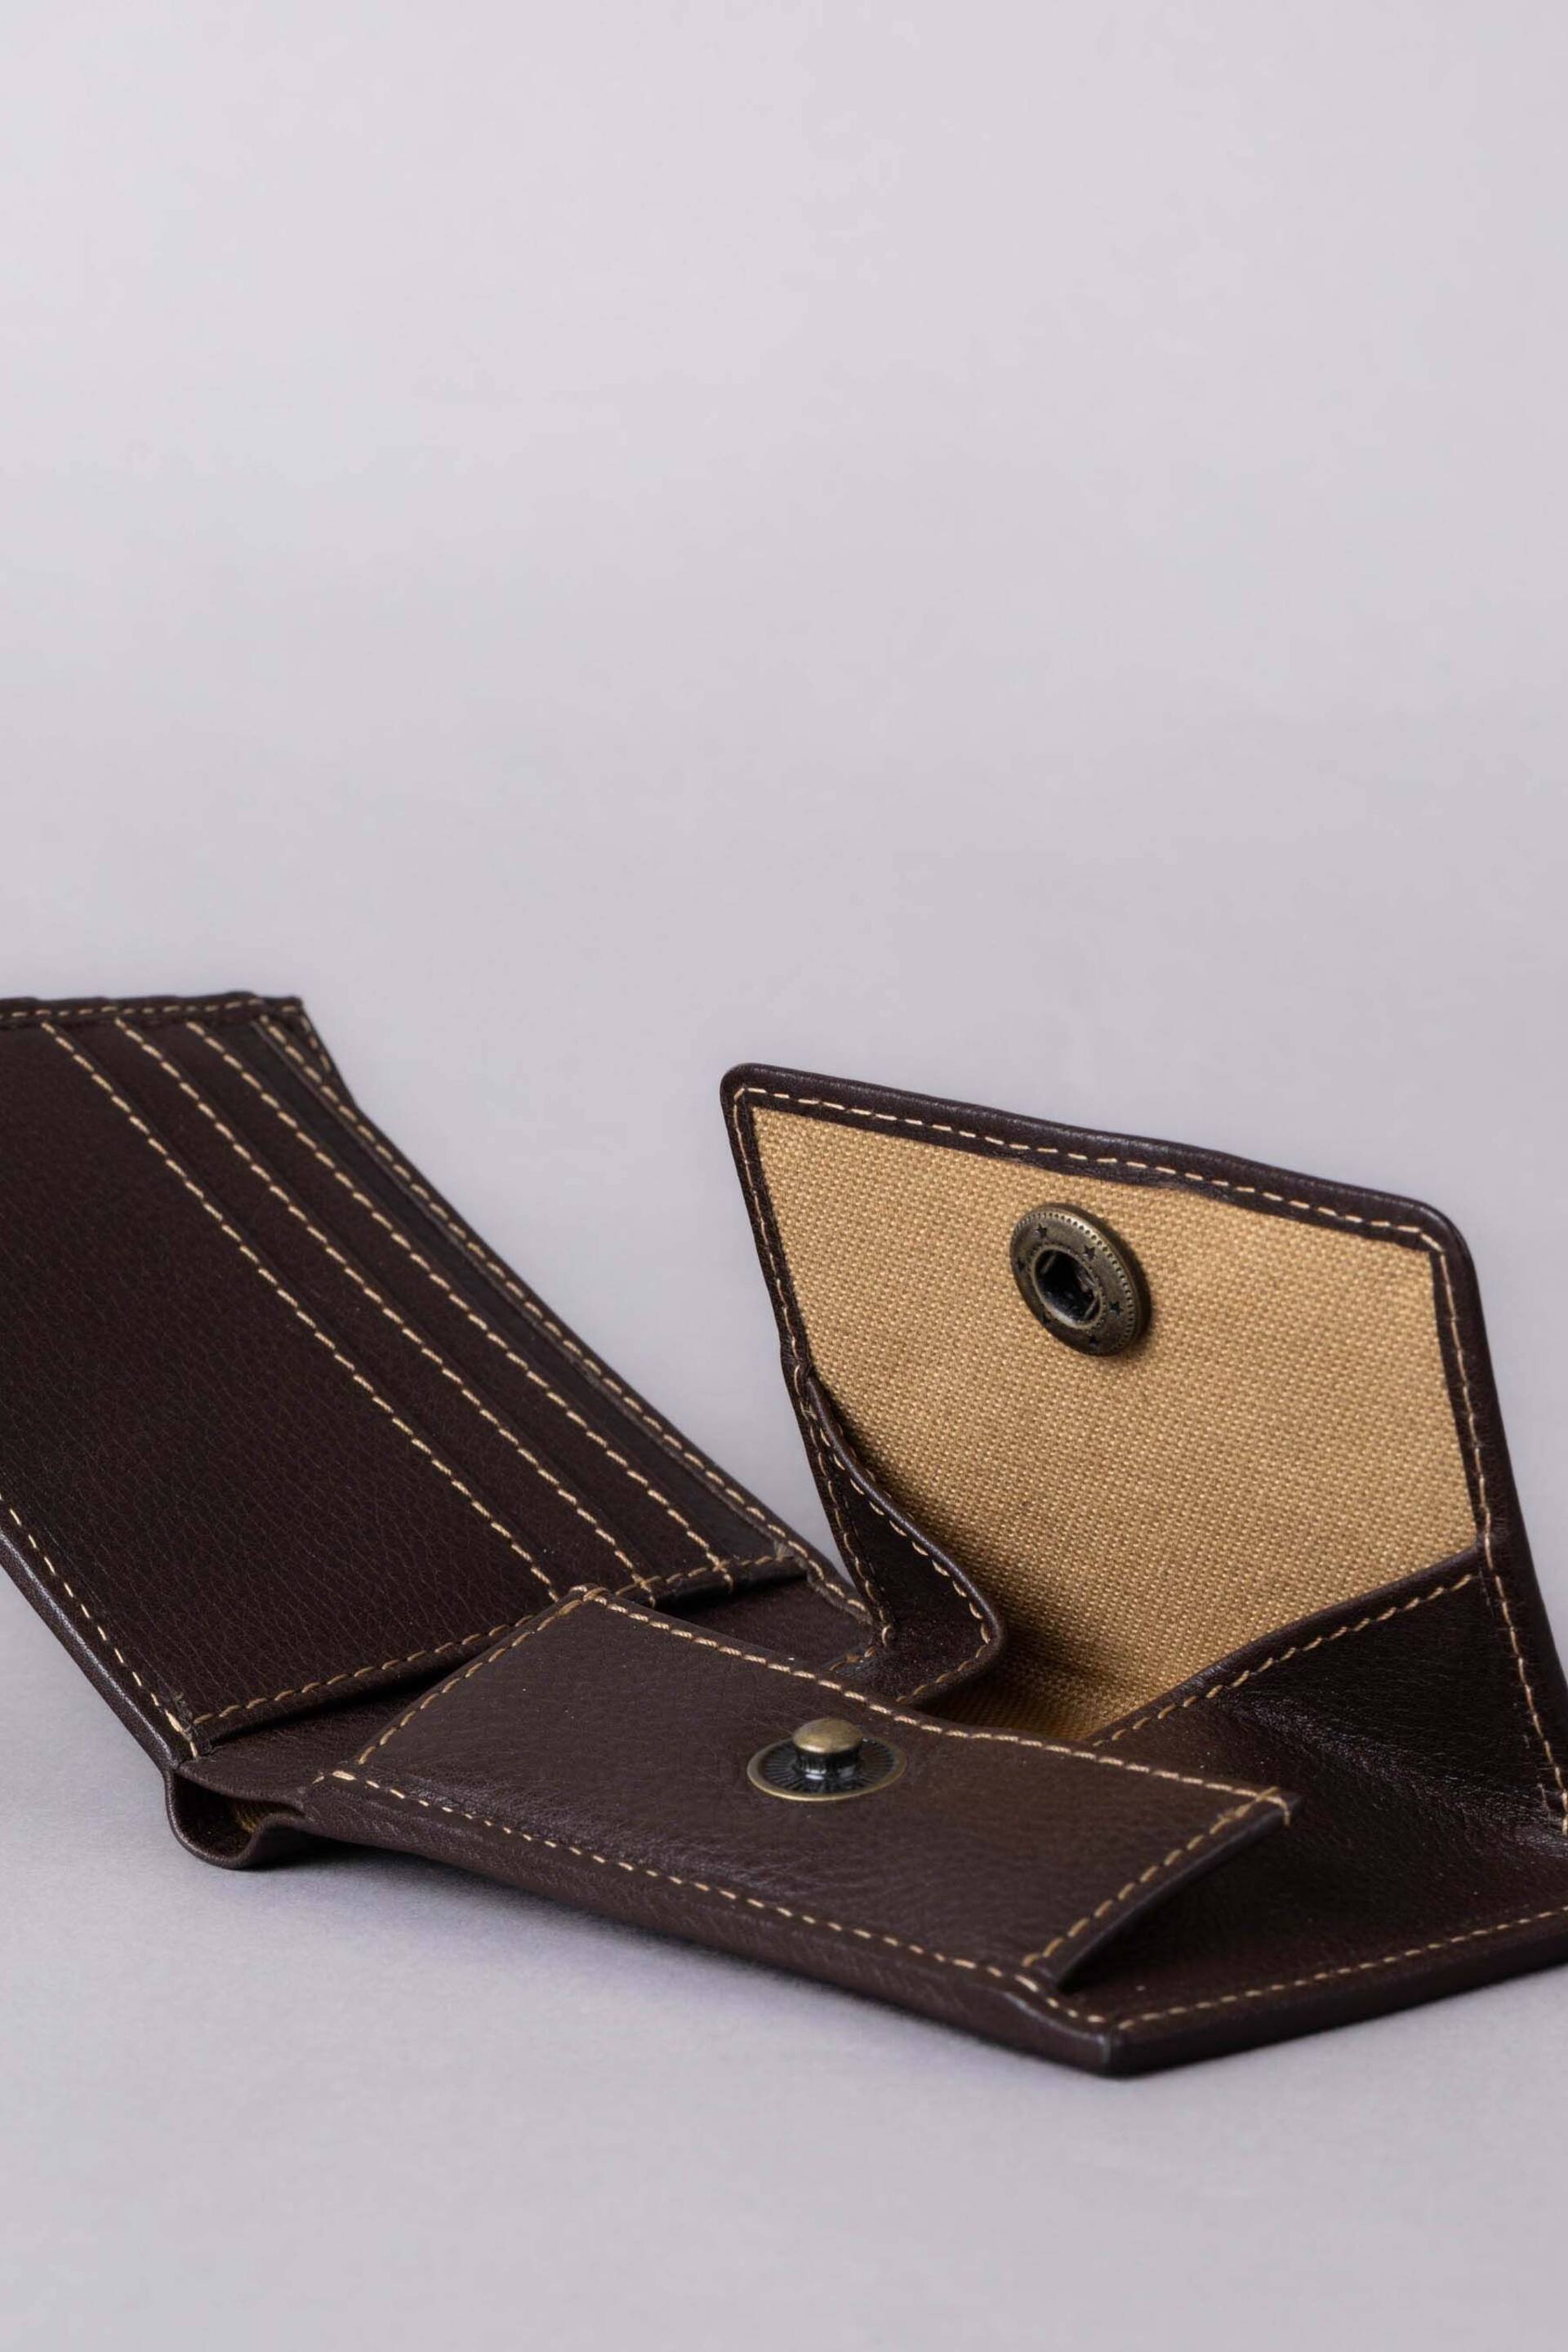 Lakeland Leather Kelsick Leather Brown Wallet - Image 4 of 7